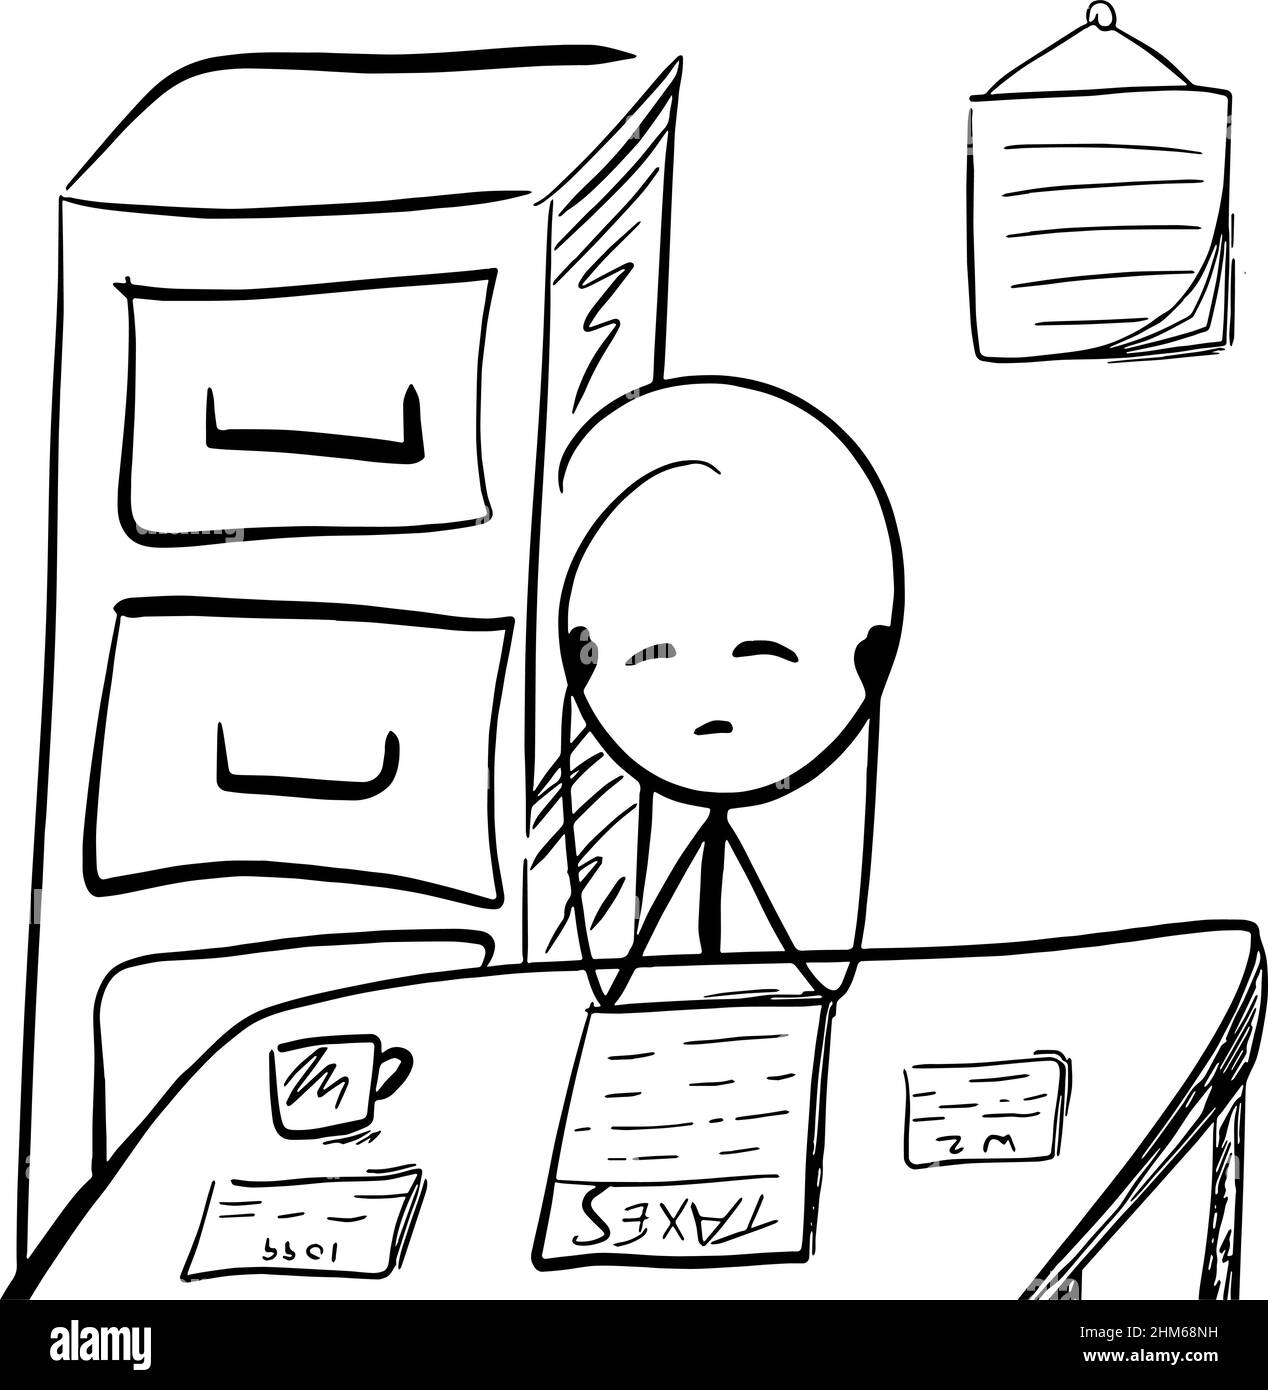 Sad and anxious stick figure cartoon character at a desk doing taxes Stock Vector